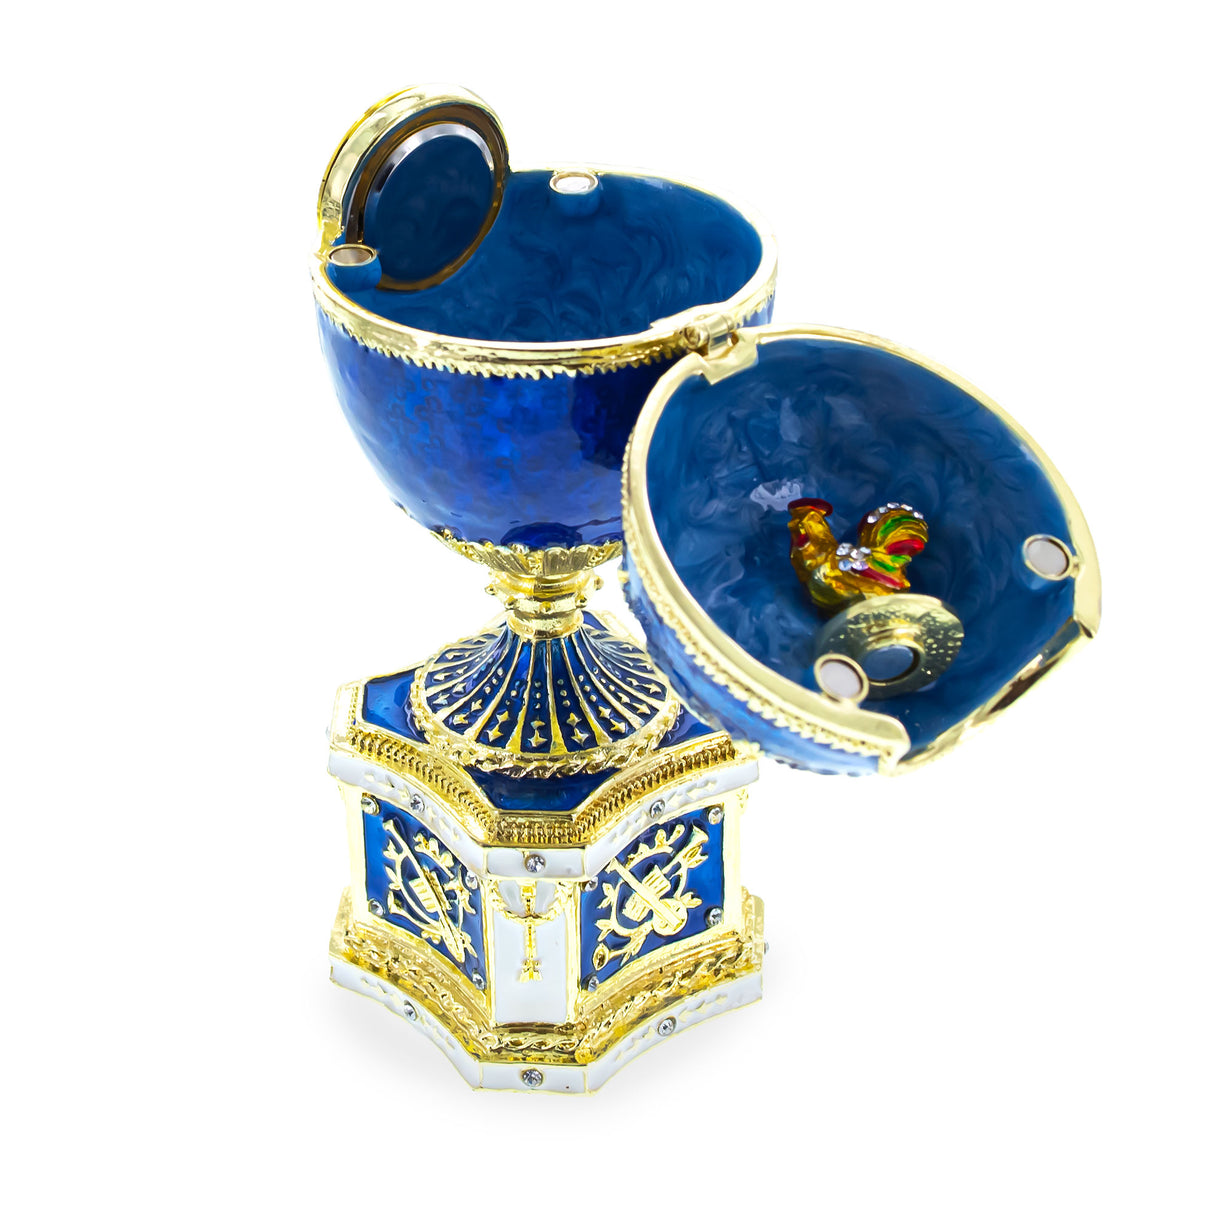 1904 Kelch Chanticleer Blue Enamel Royal Imperial Easter Egg with Clock